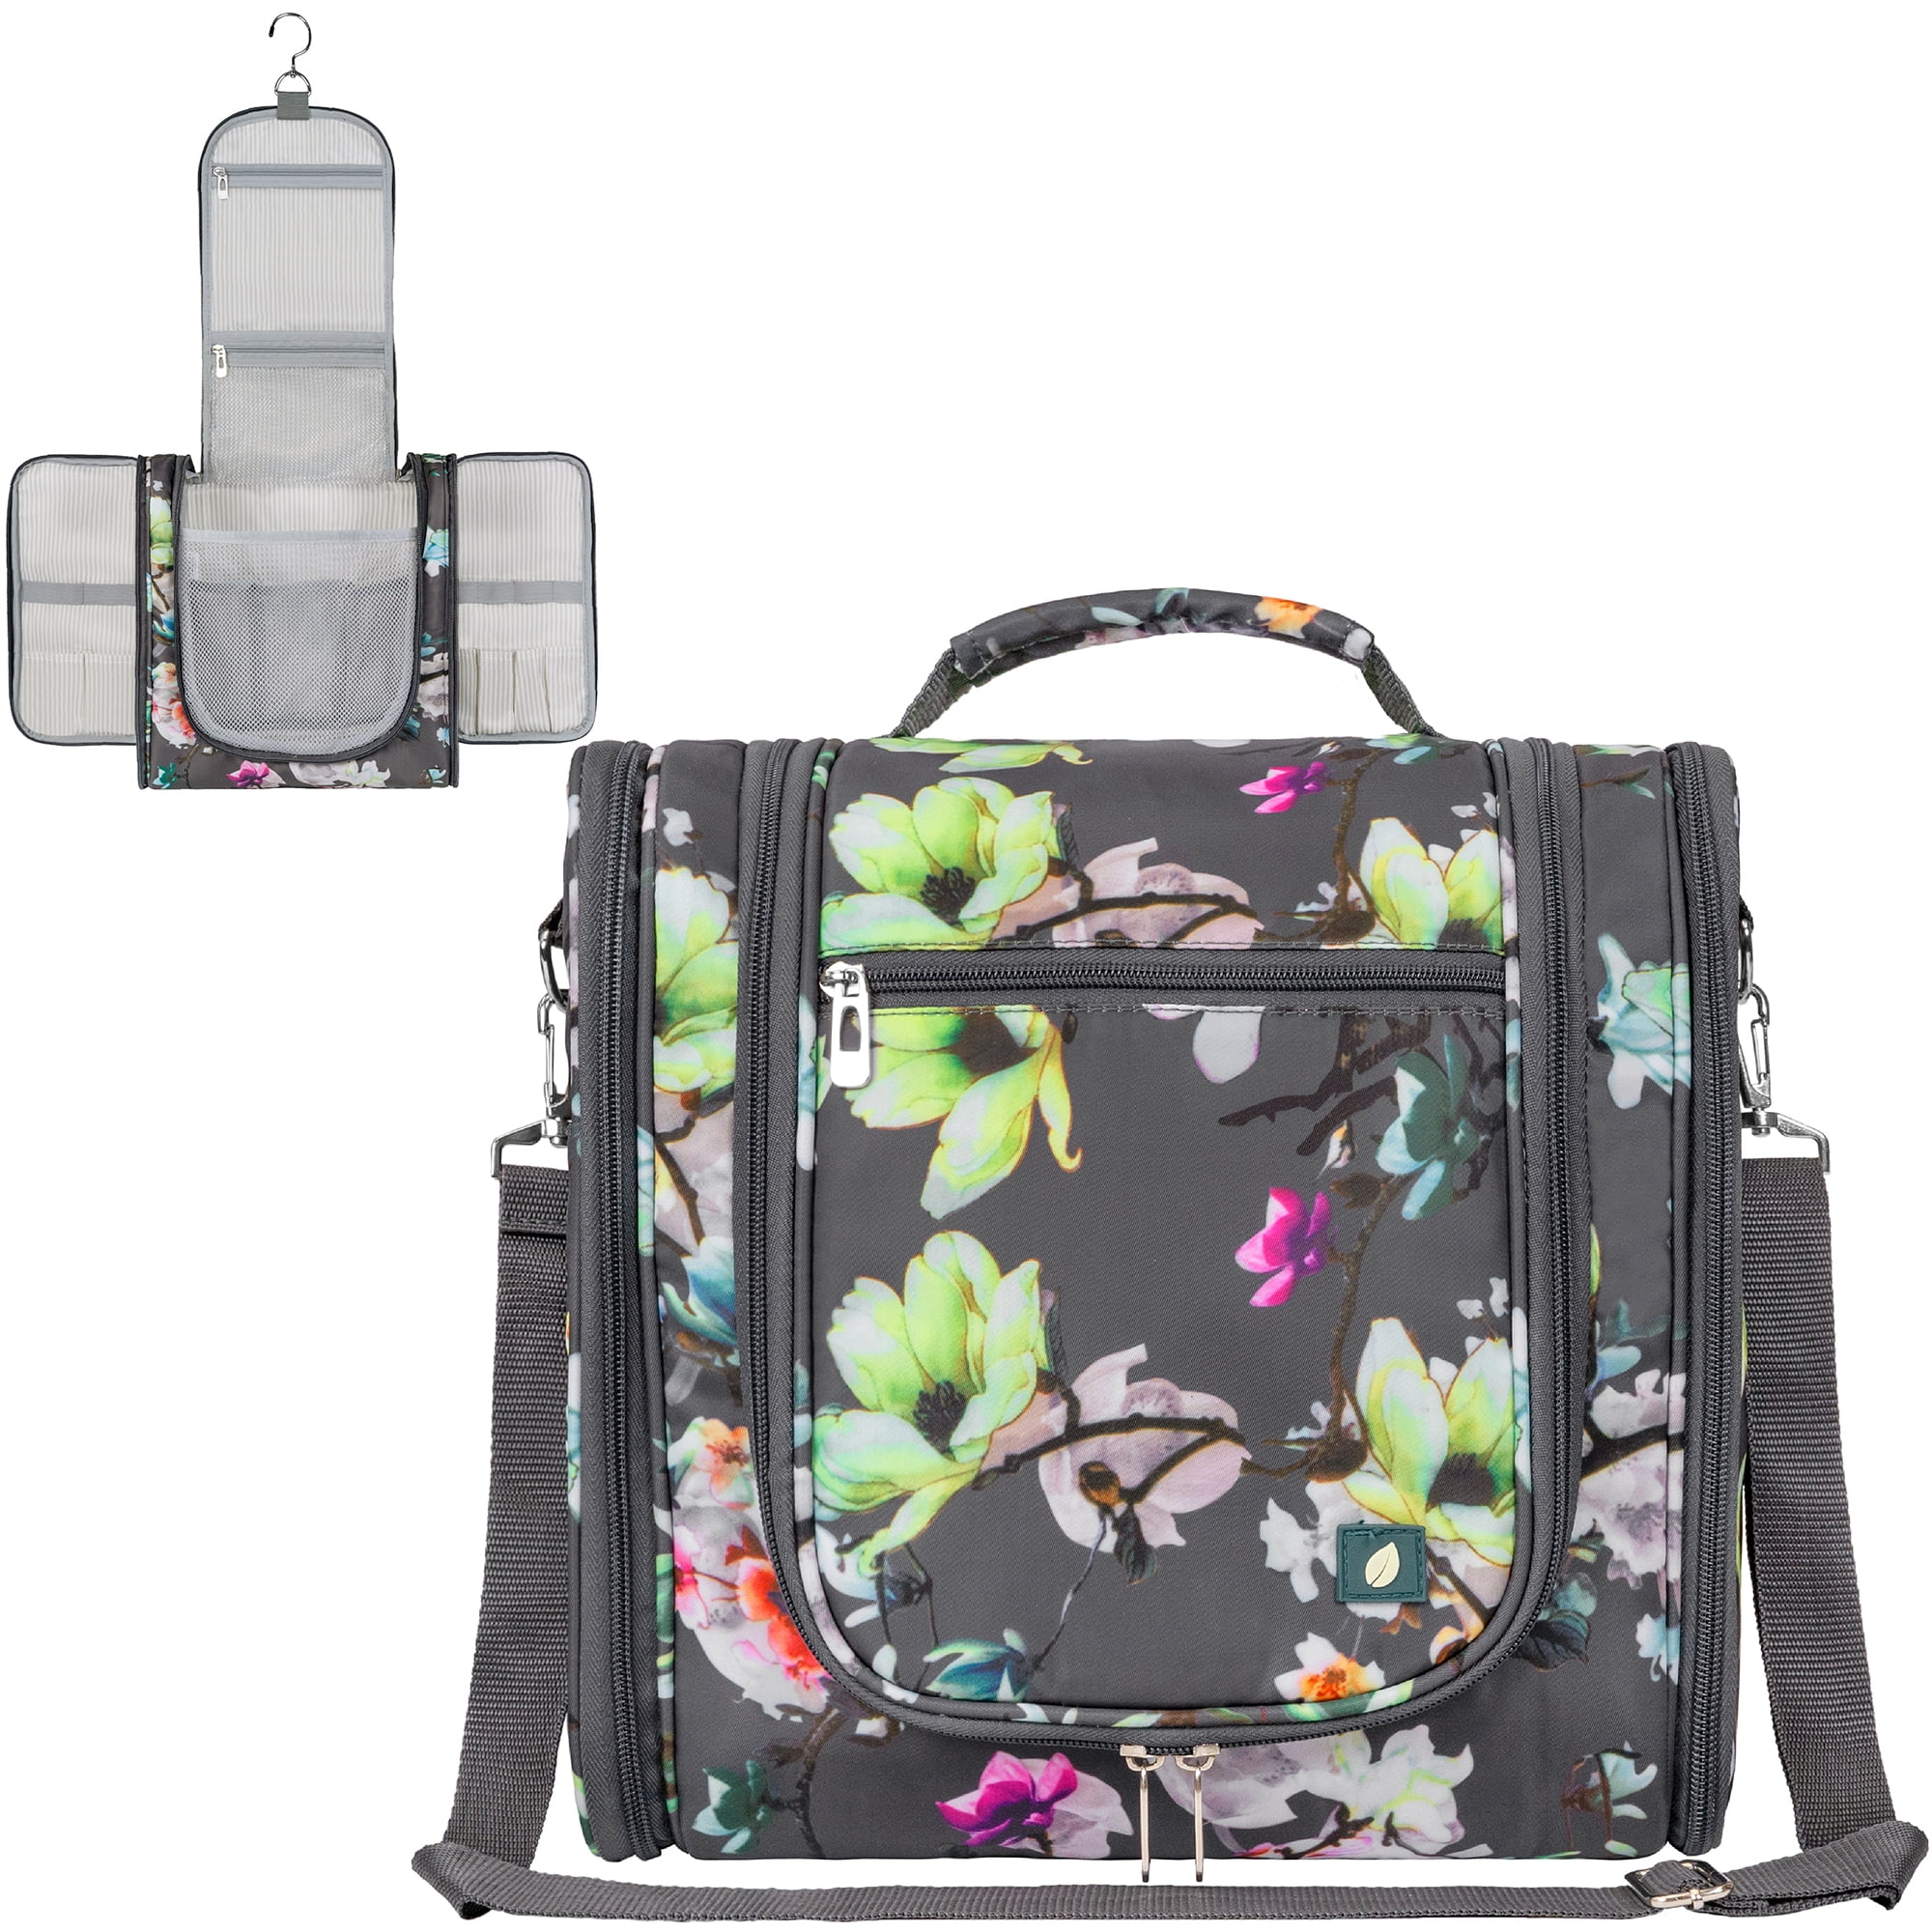 GOX Travel Toiletry Bag,Dopp Kit Case,Ultra-Light Cosmetics Bag Makeup Organizer(Black)